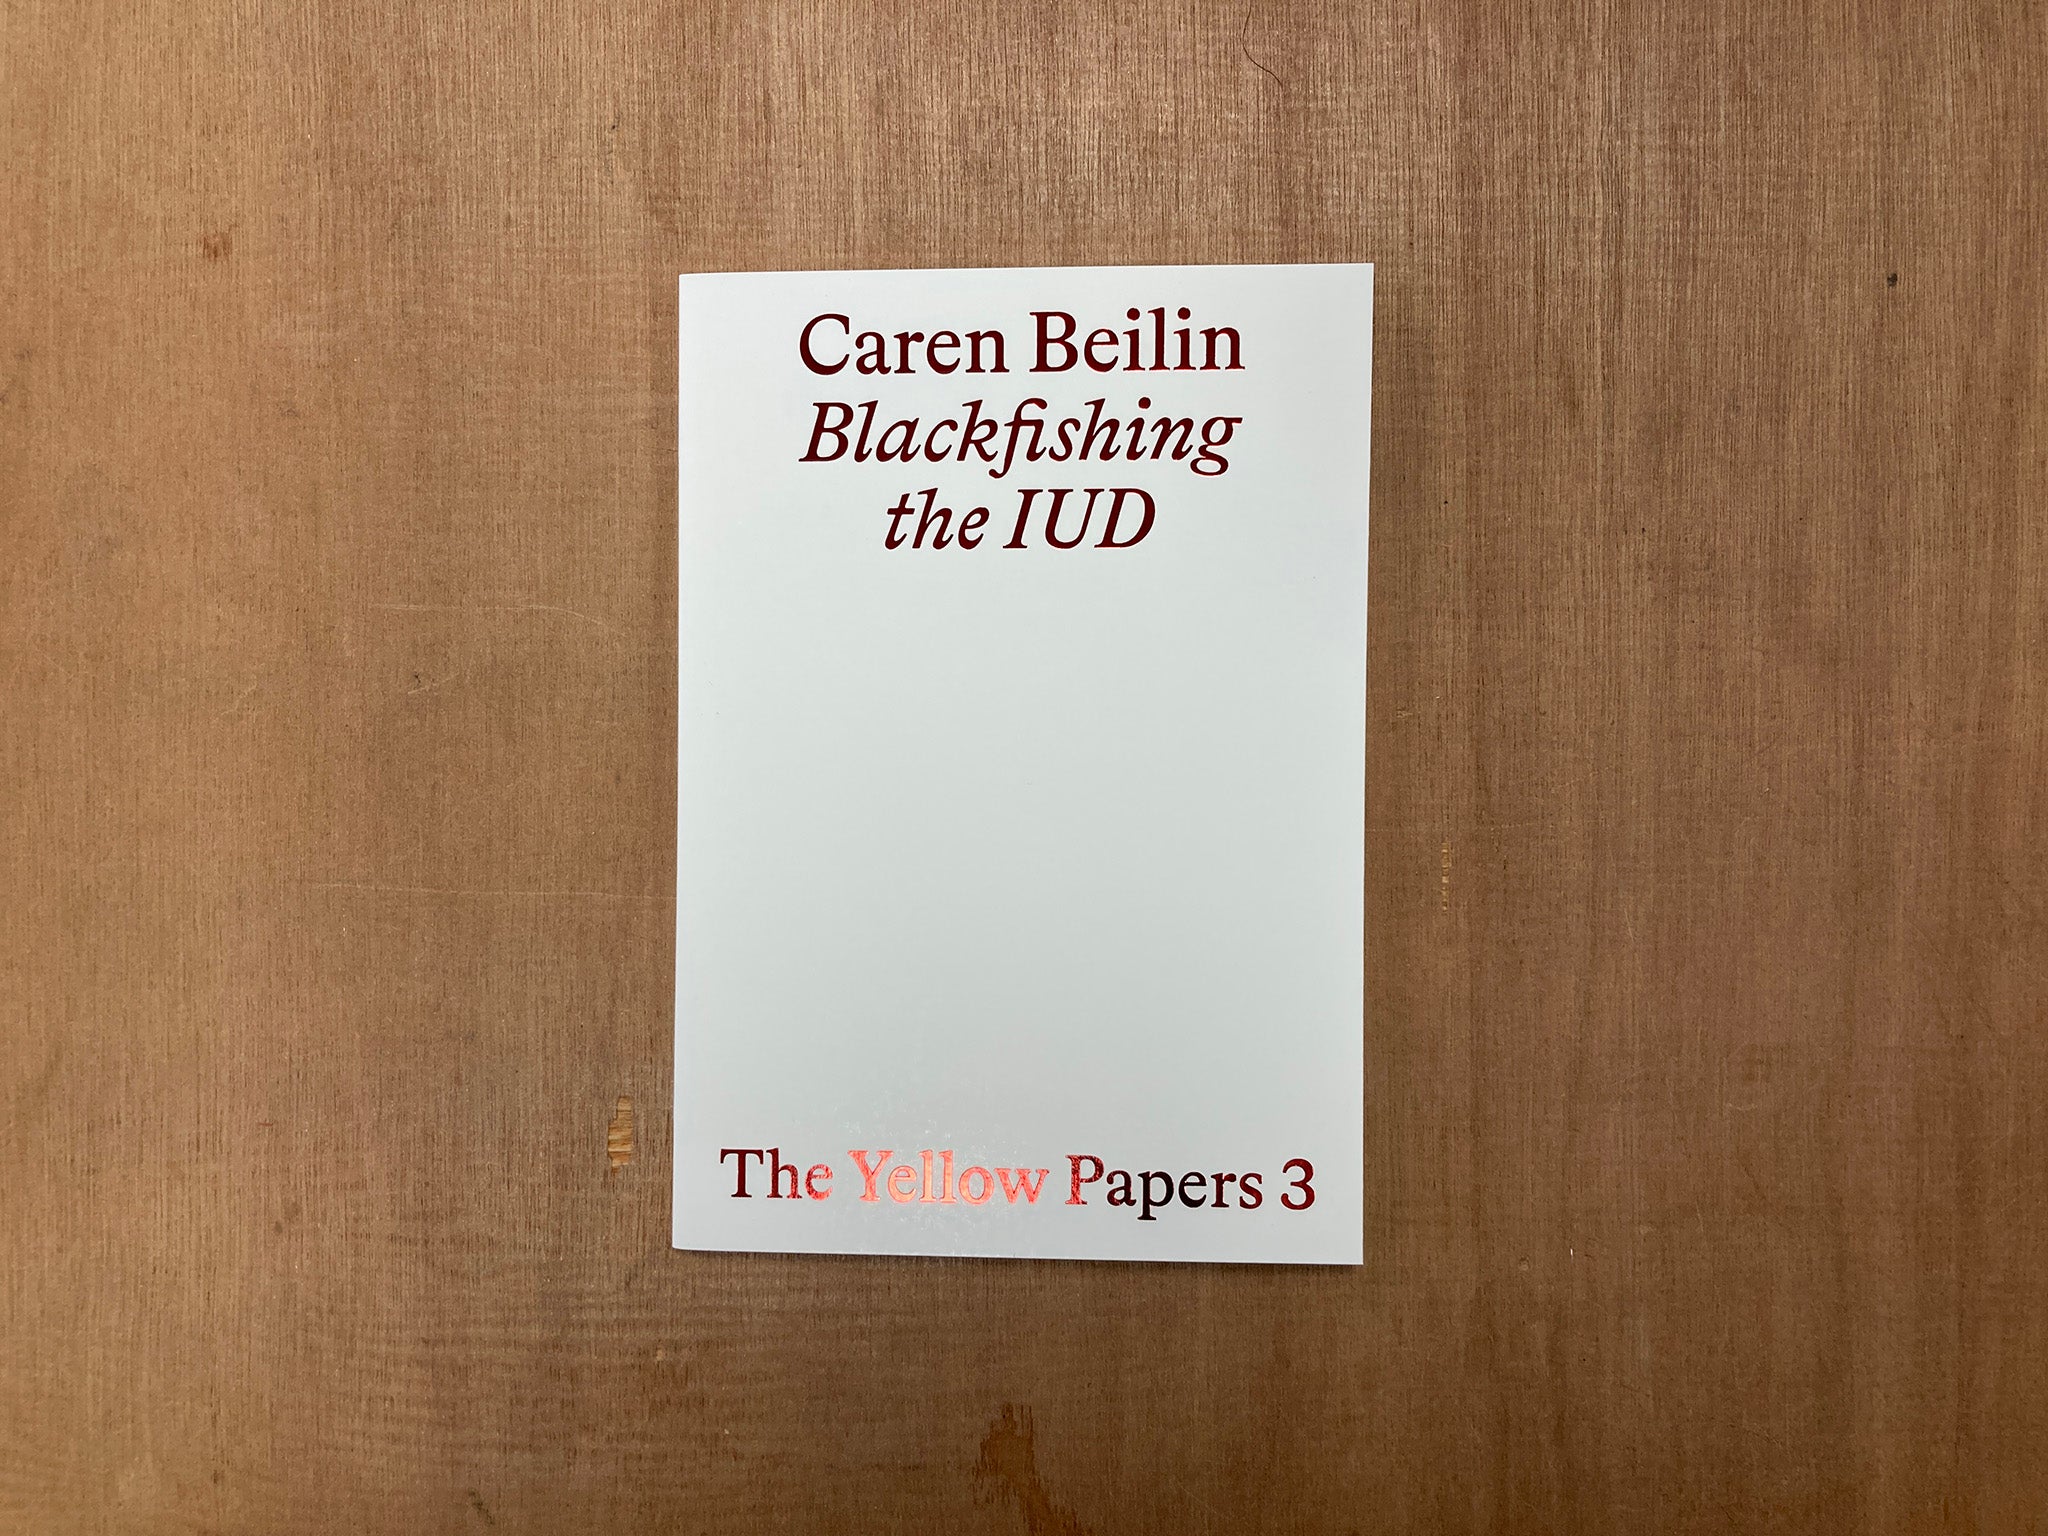 BLACKFISHING THE IUD by Caren Beilin